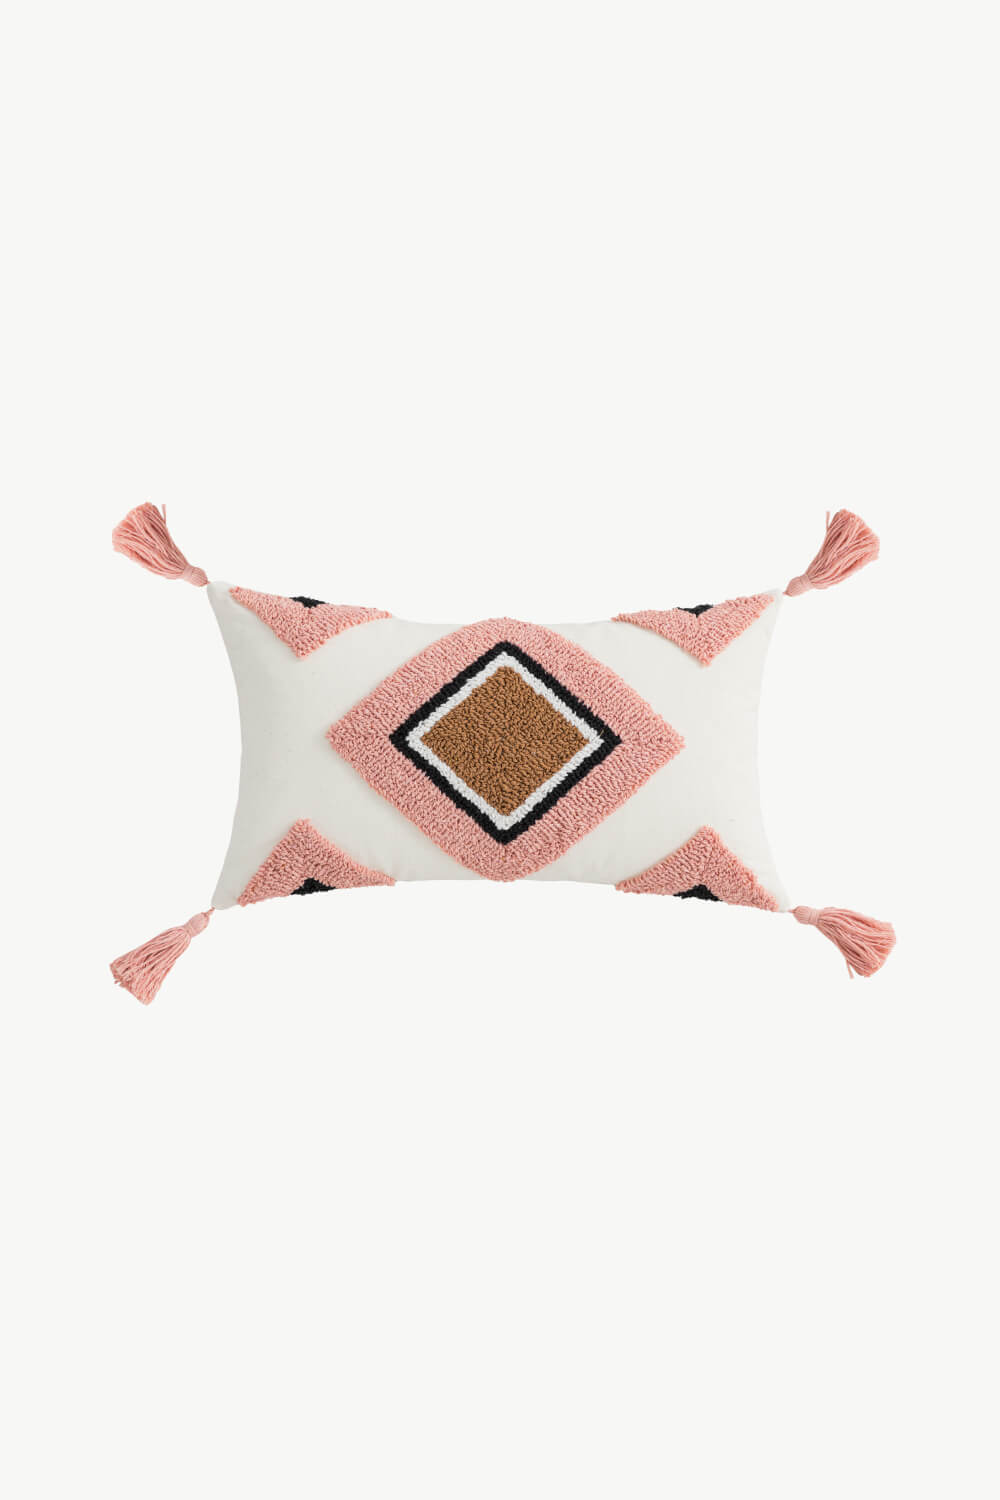 4 Styles Geometric Graphic Tassel Pillow Cover - BloomBliss.com